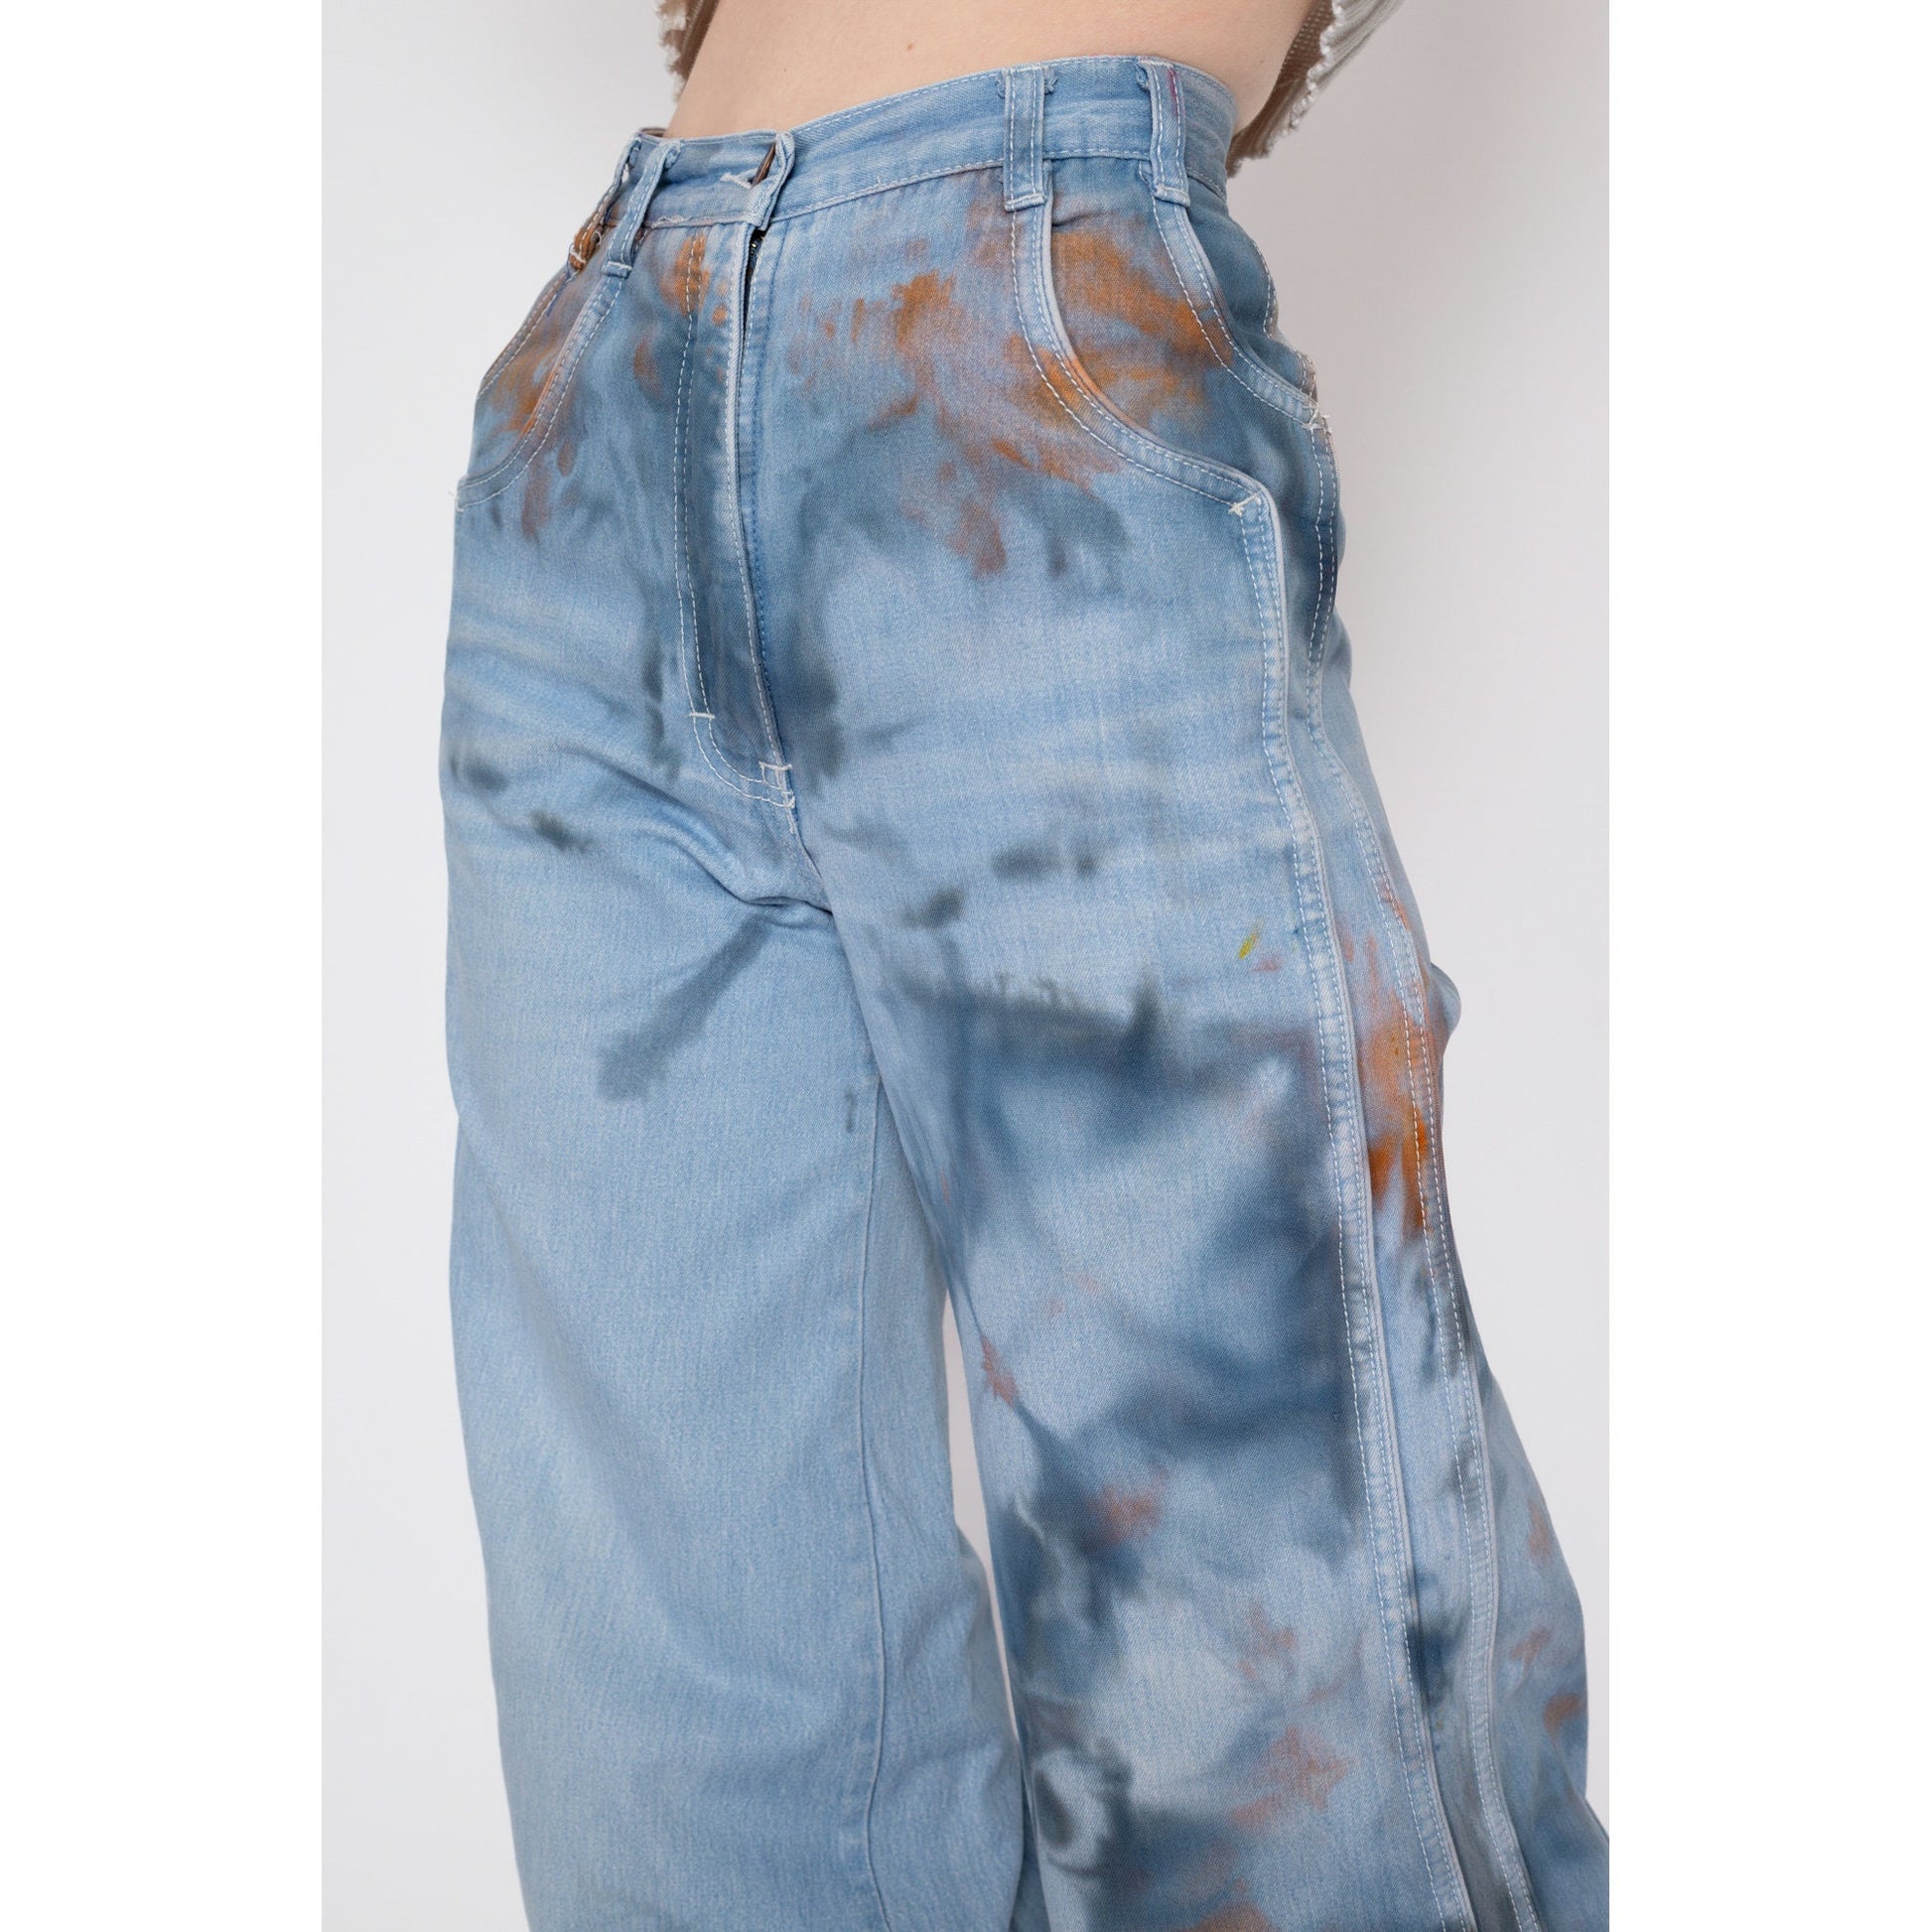 XXS 70s Tie Dye Flared Sailor Jeans 22" | Vintage Light Blue High Waisted Wide Leg Bell Bottoms